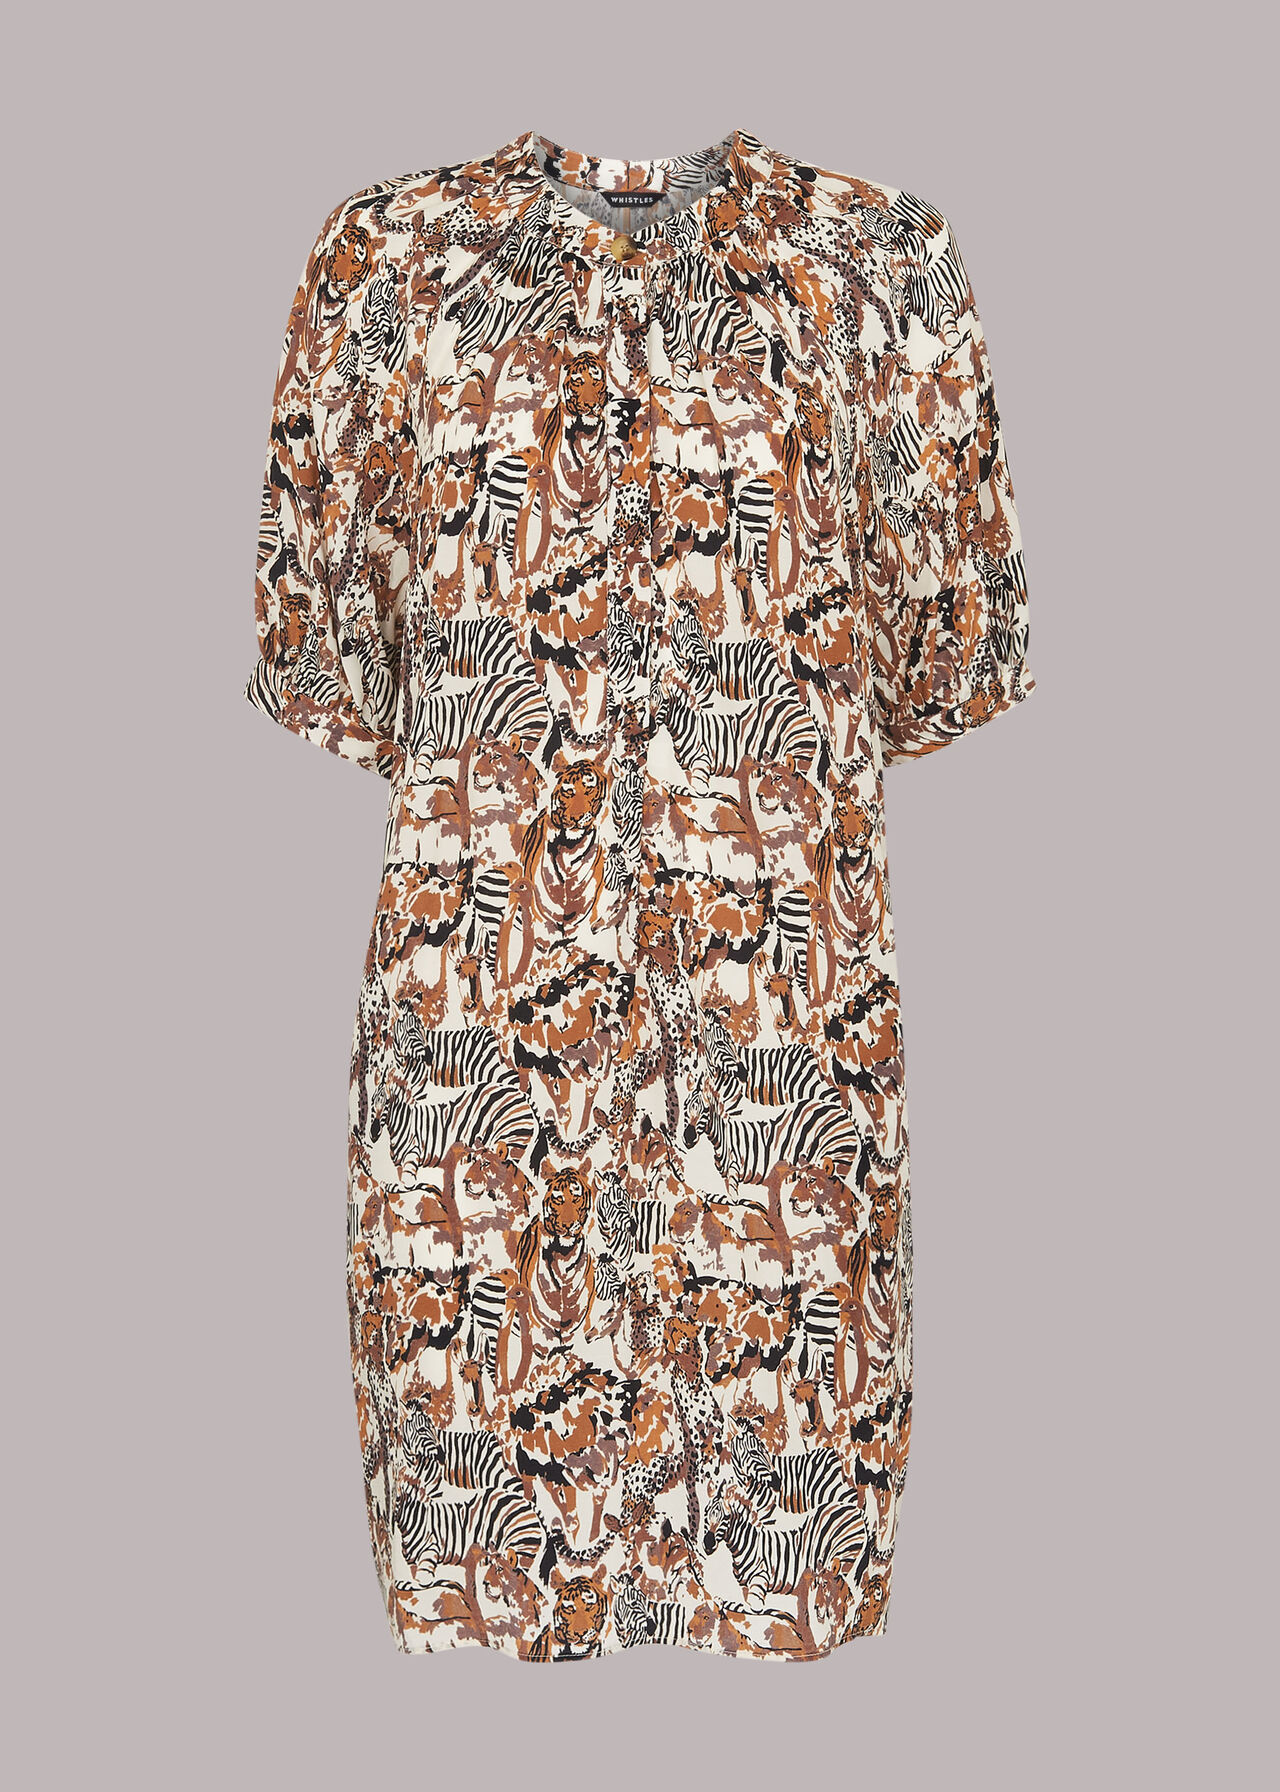 Camo Safari Print Dress